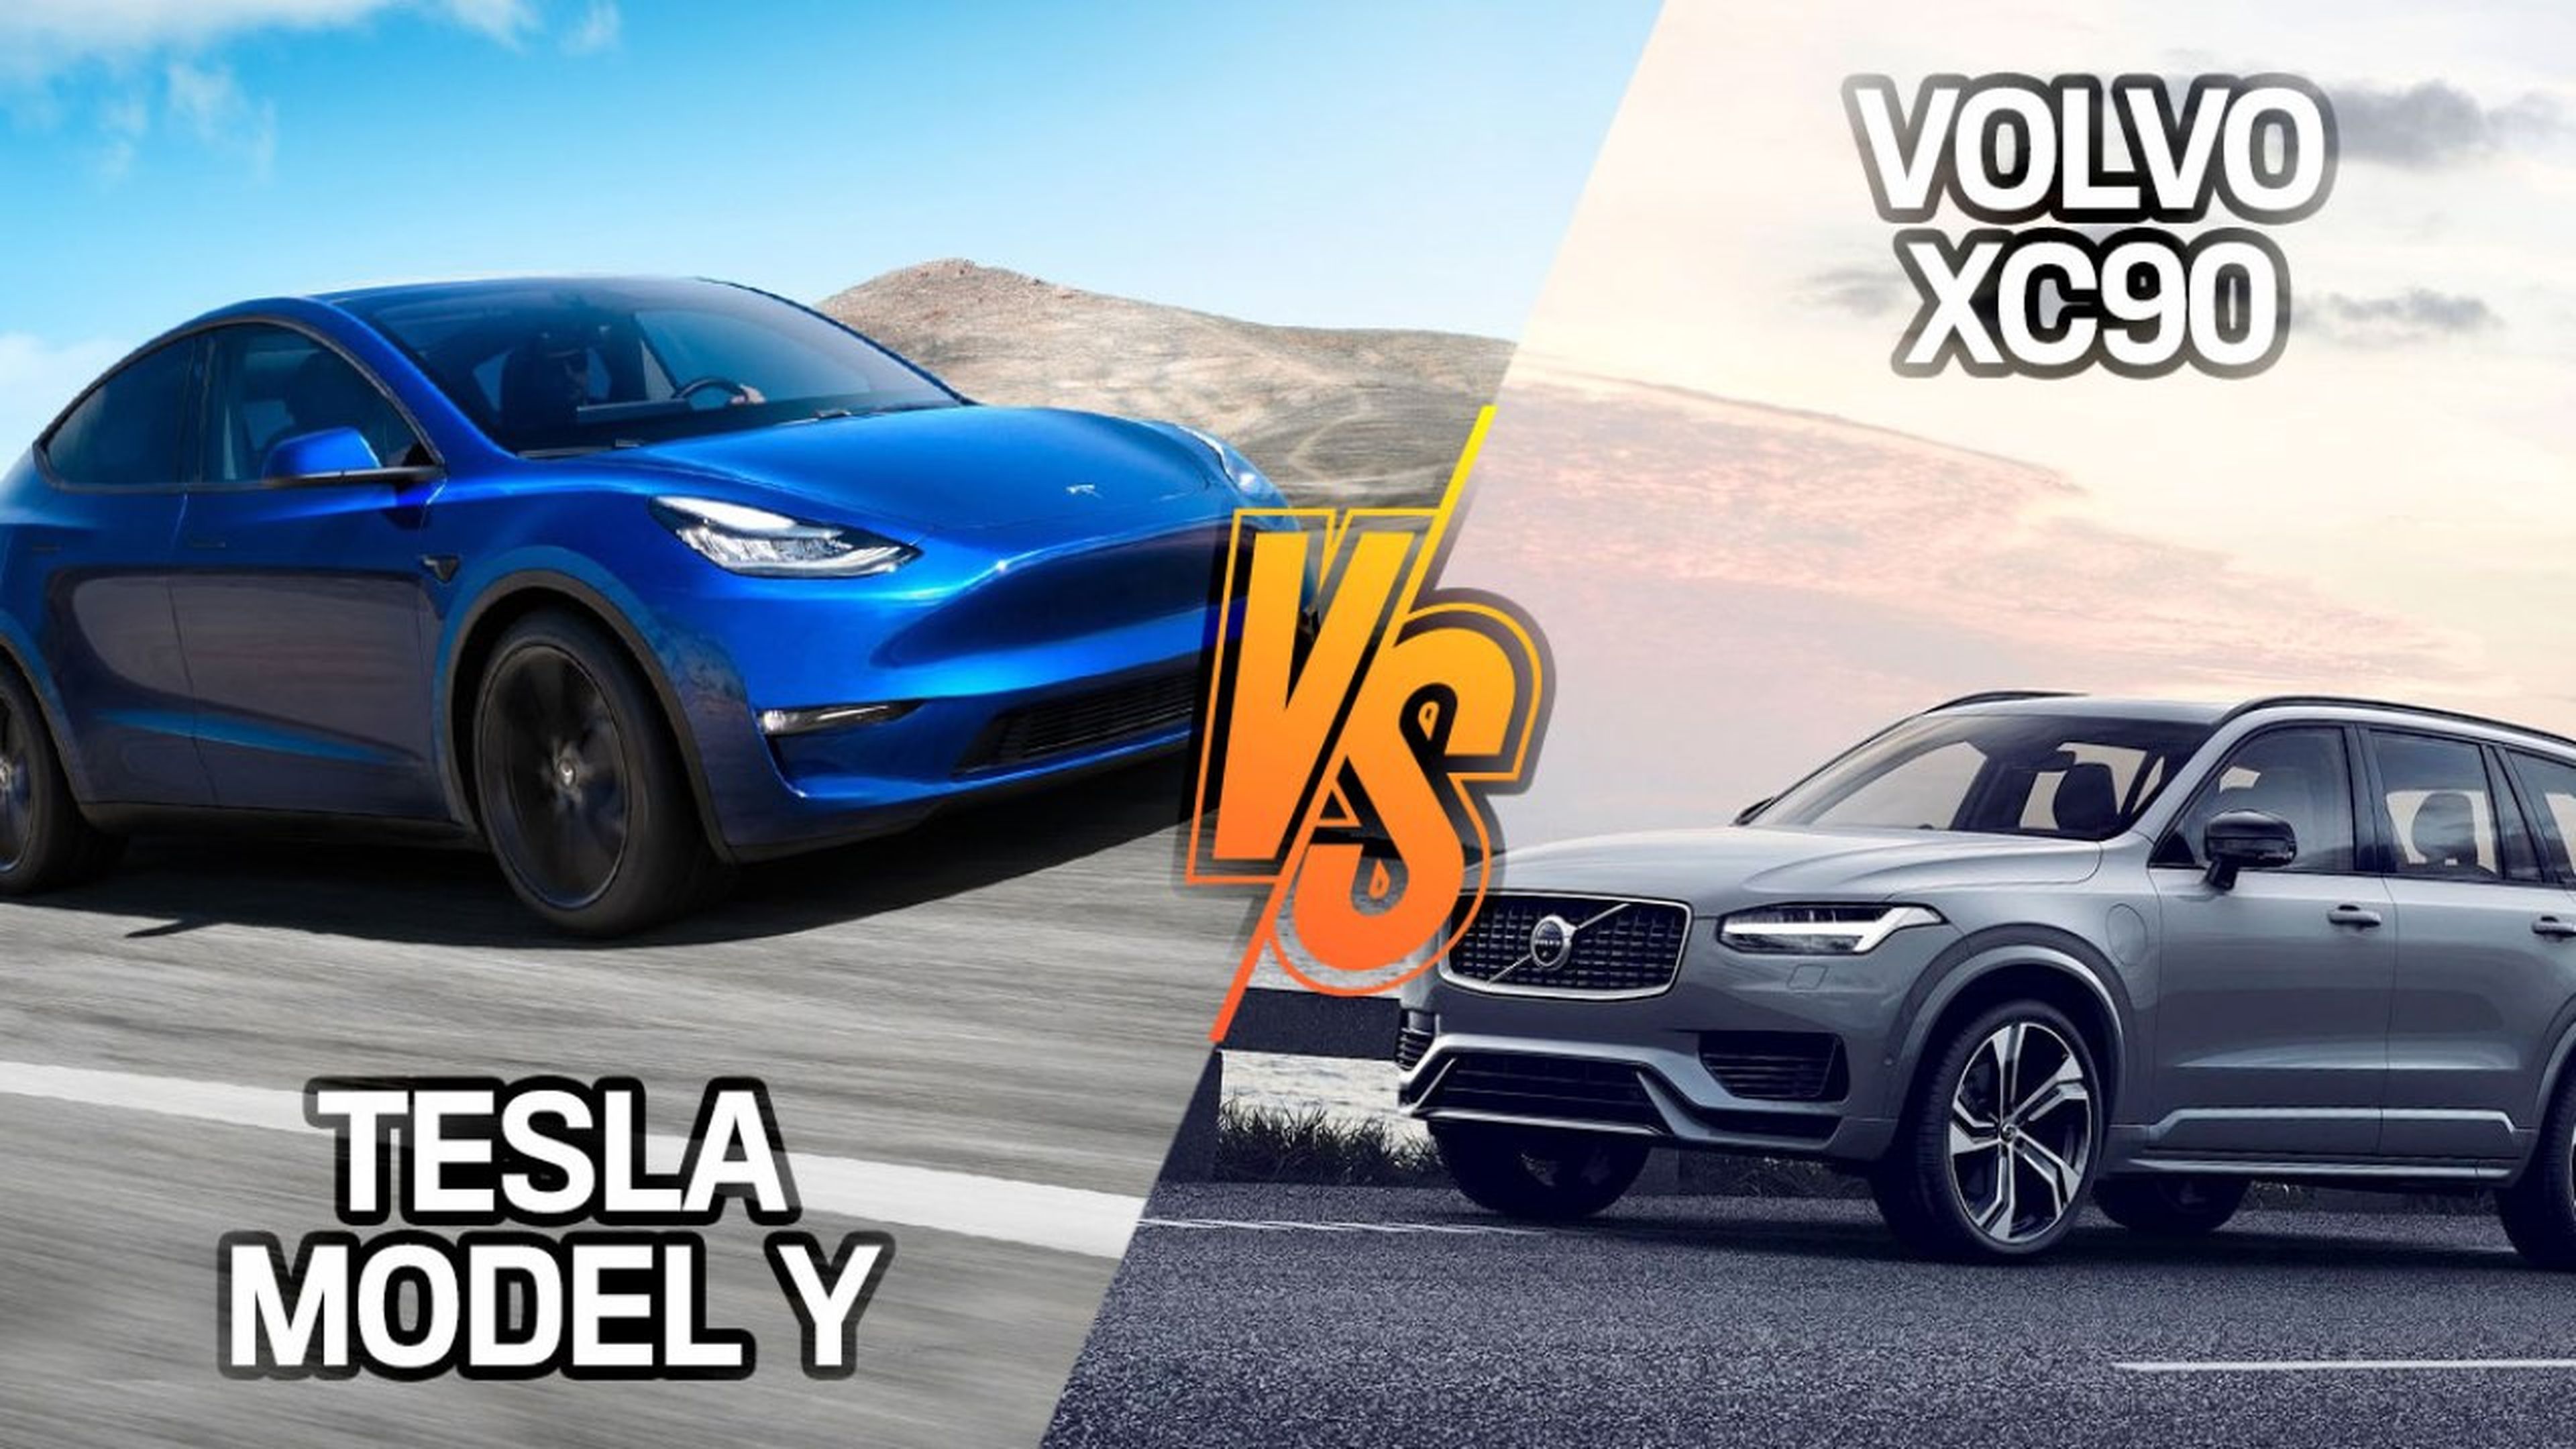 Volvo XC90 T8 vs Tesla Model Y